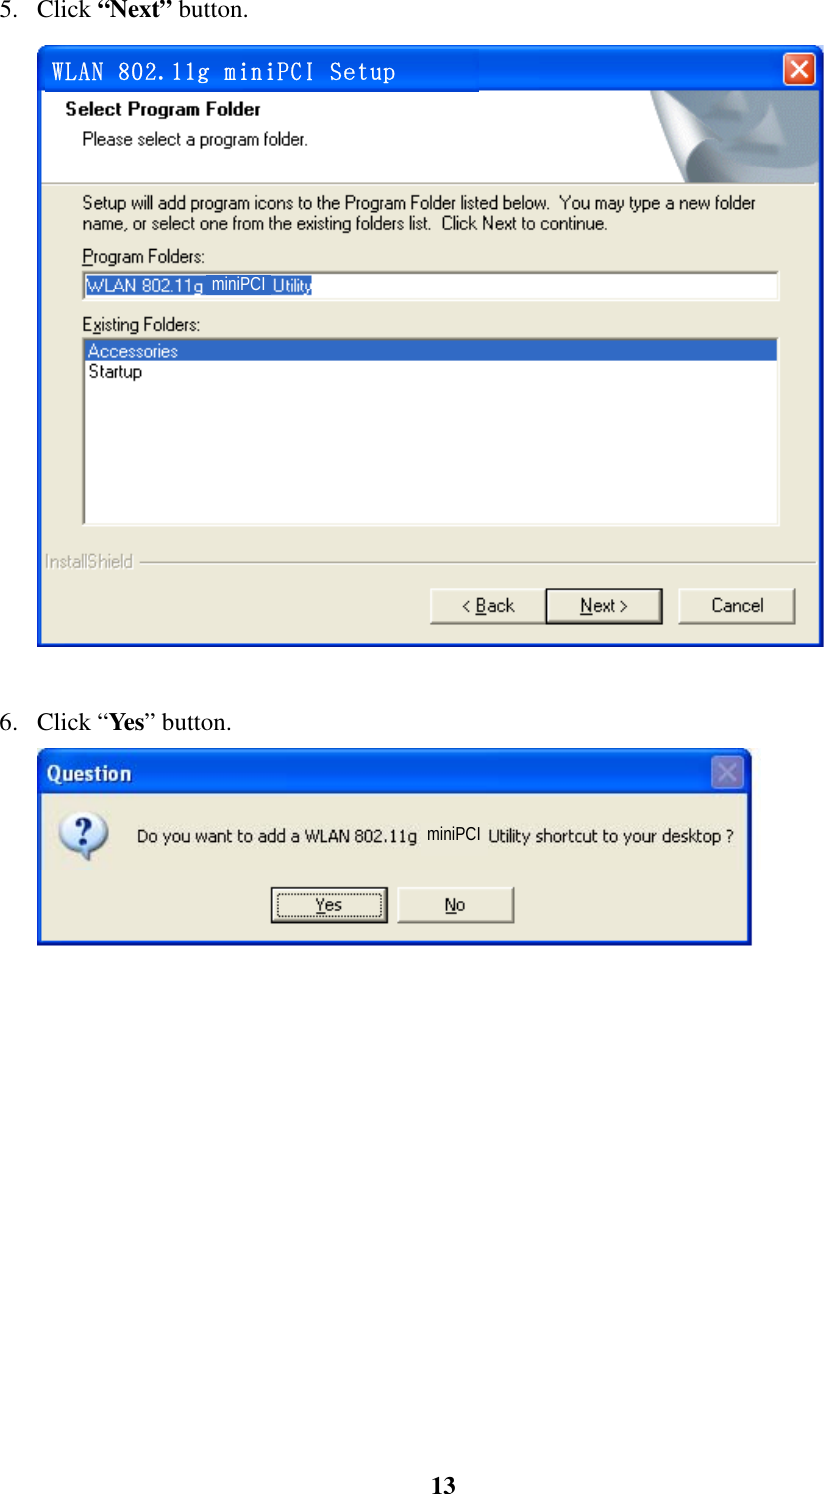    135. Click “Next” button.  miniPCI WLAN 802.11g miniPCI Setup   6. Click “Yes” button.  miniPCI    